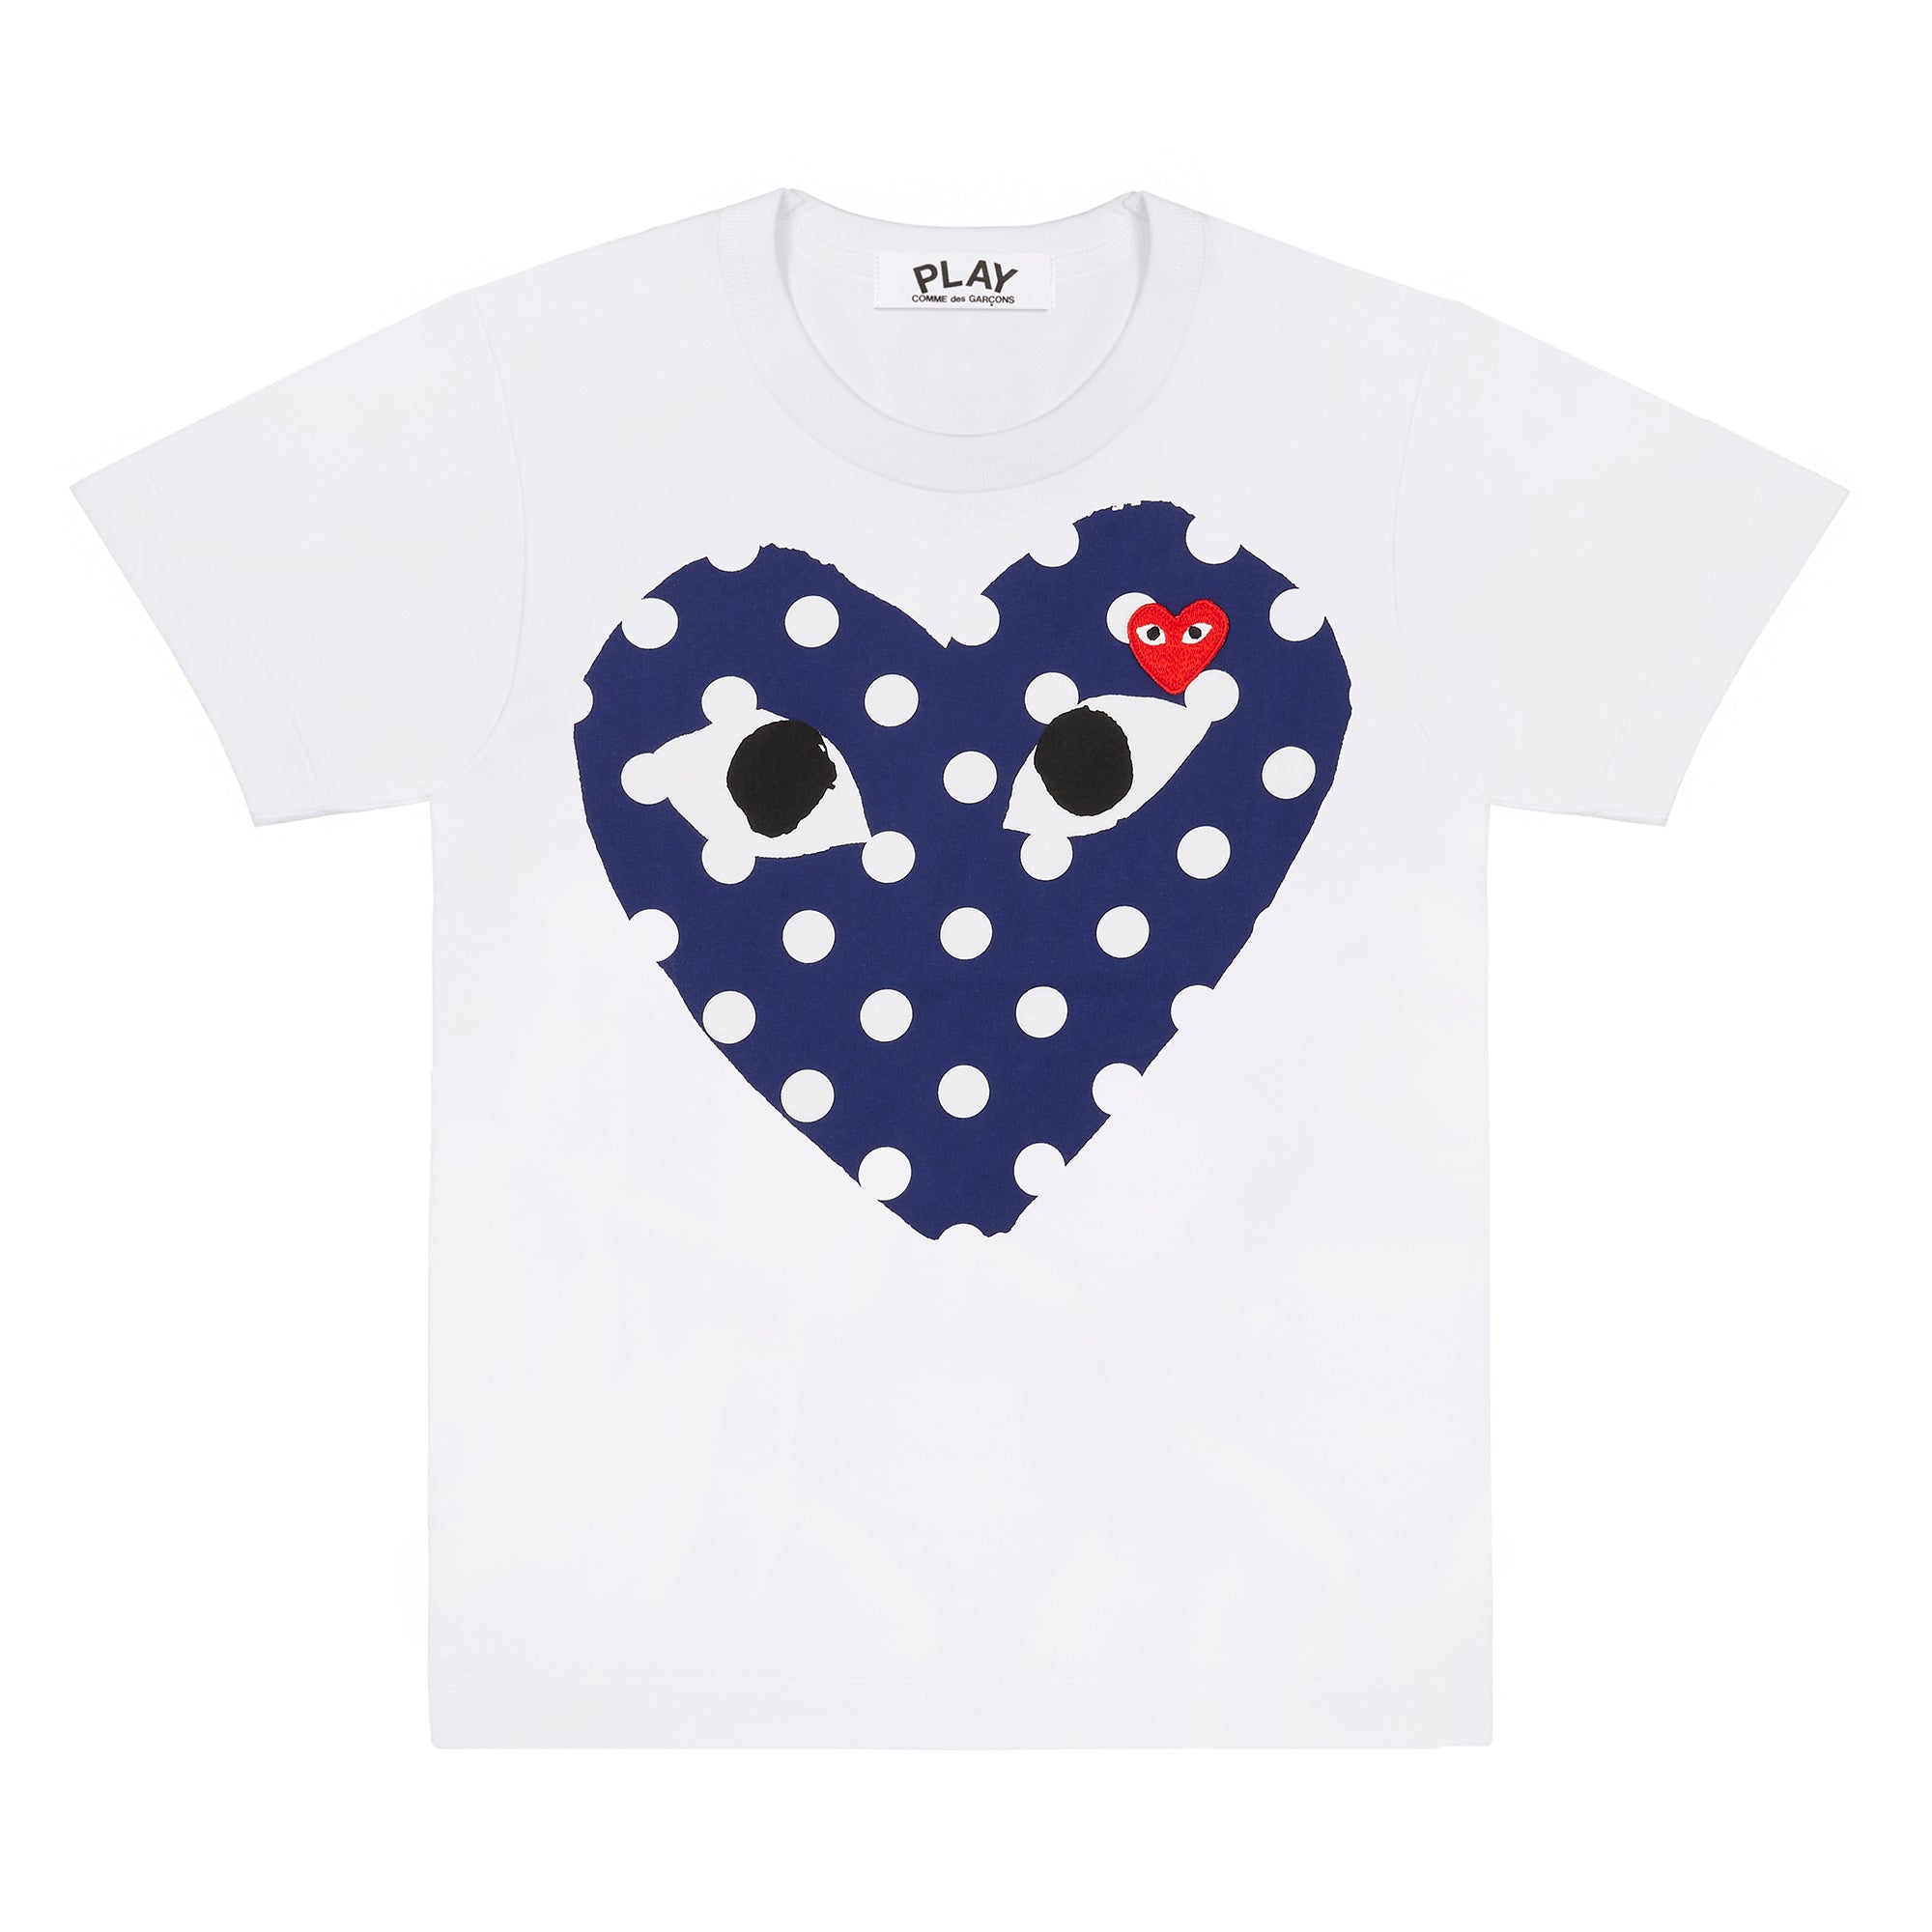 Play - Polka Dot Big Heart T-Shirt - (White) view 1